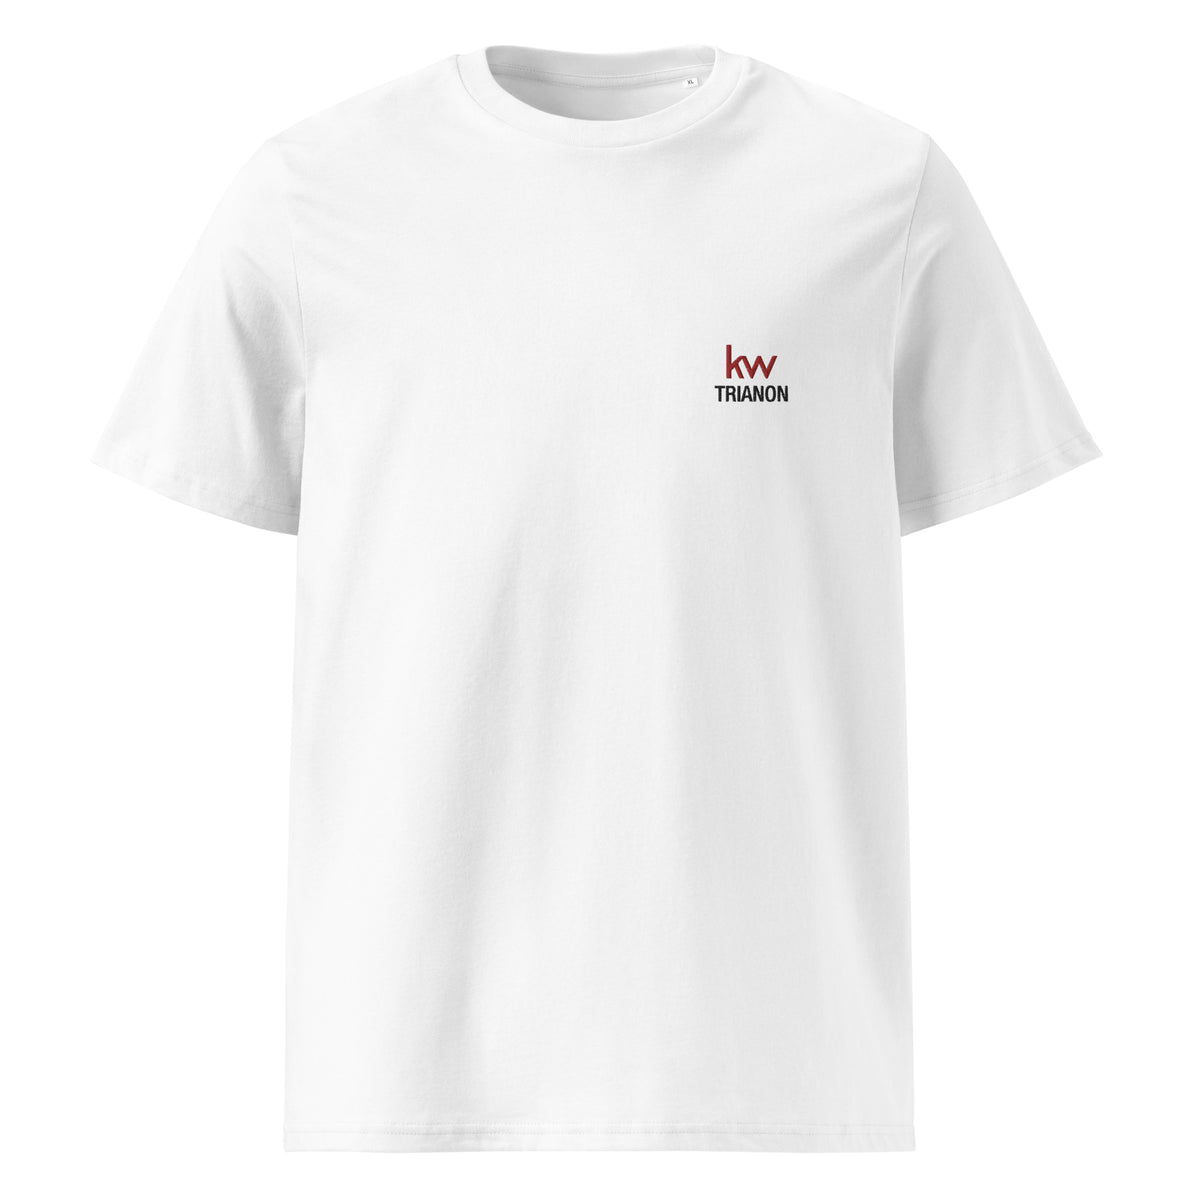 T-Shirt Unisexe Brodé - KW Trianon